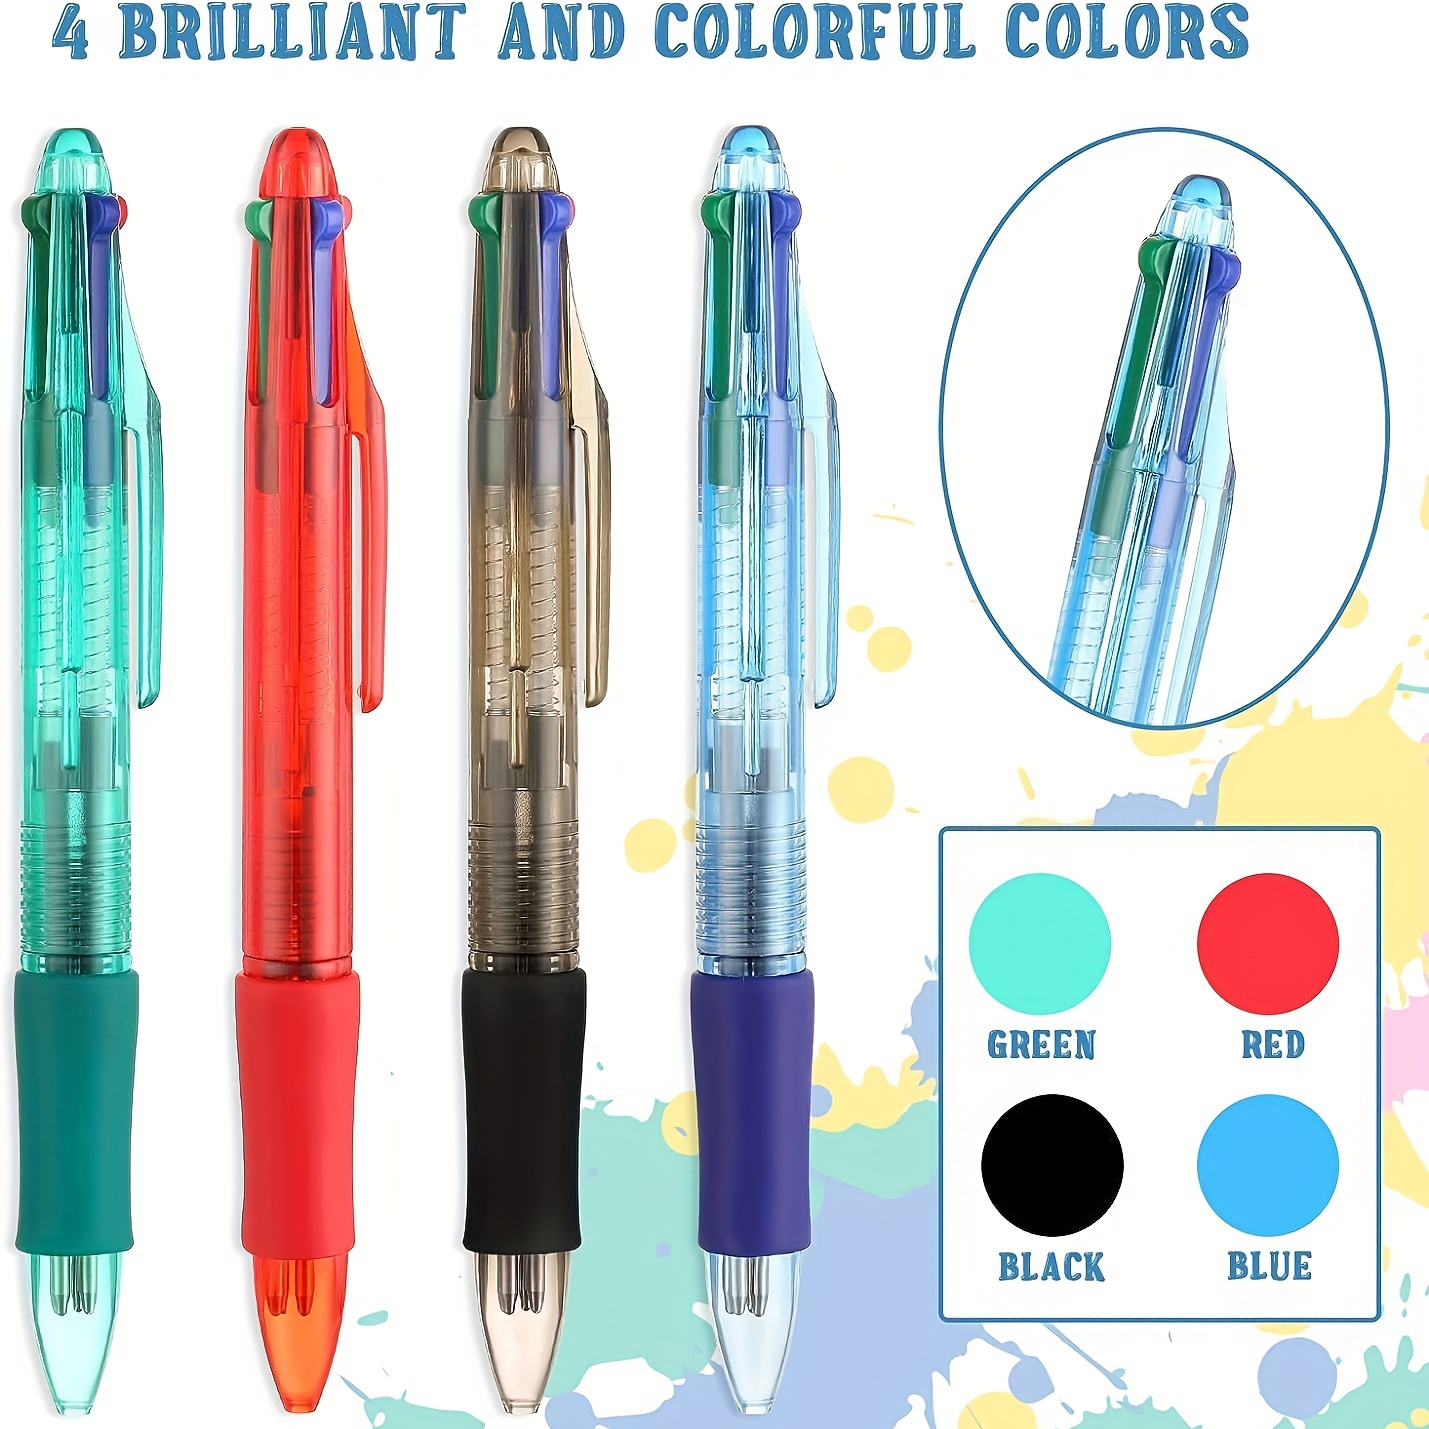 Doress 4 Colors Ballpoint Pen, Medium Point, 4 Colors In